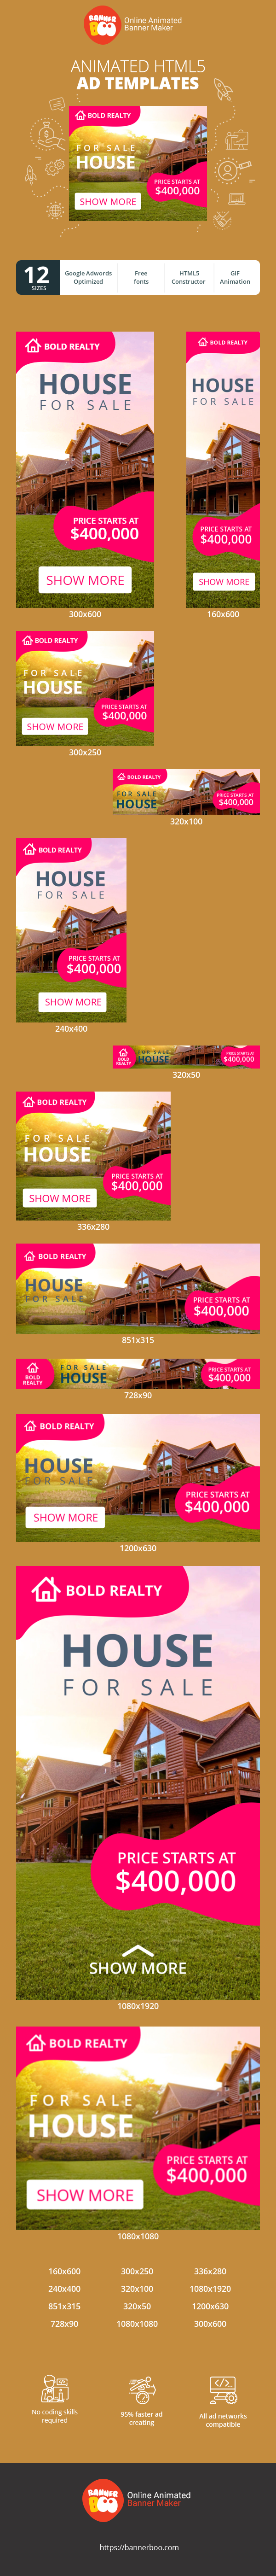 Szablon reklamy banerowej — House For Sale — Price Starts At $400000